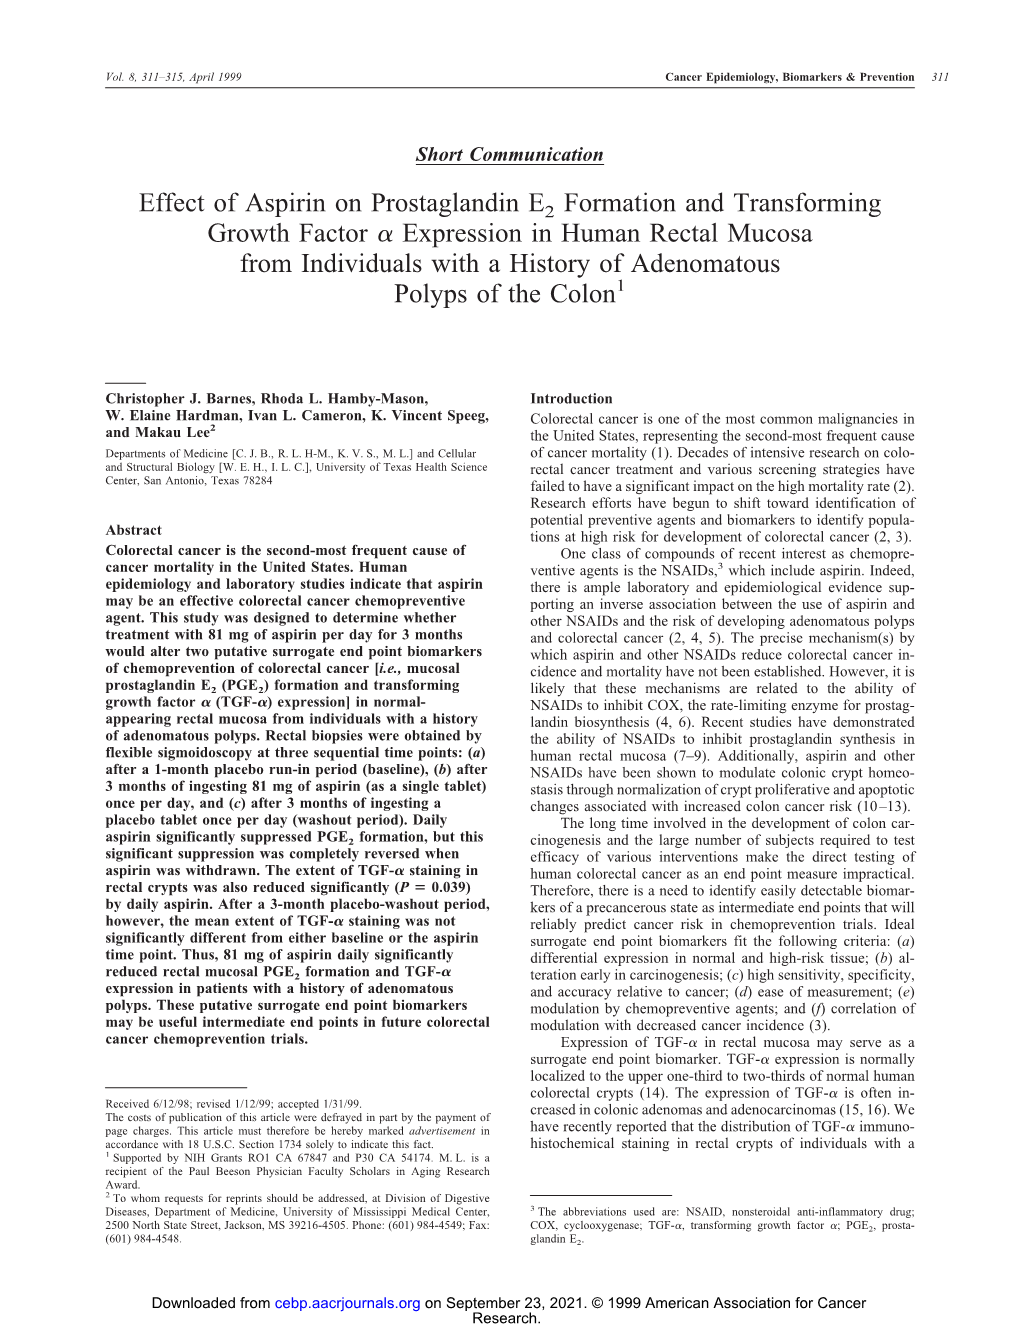 Effect of Aspirin on Prostaglandin E2 Formation and Transforming